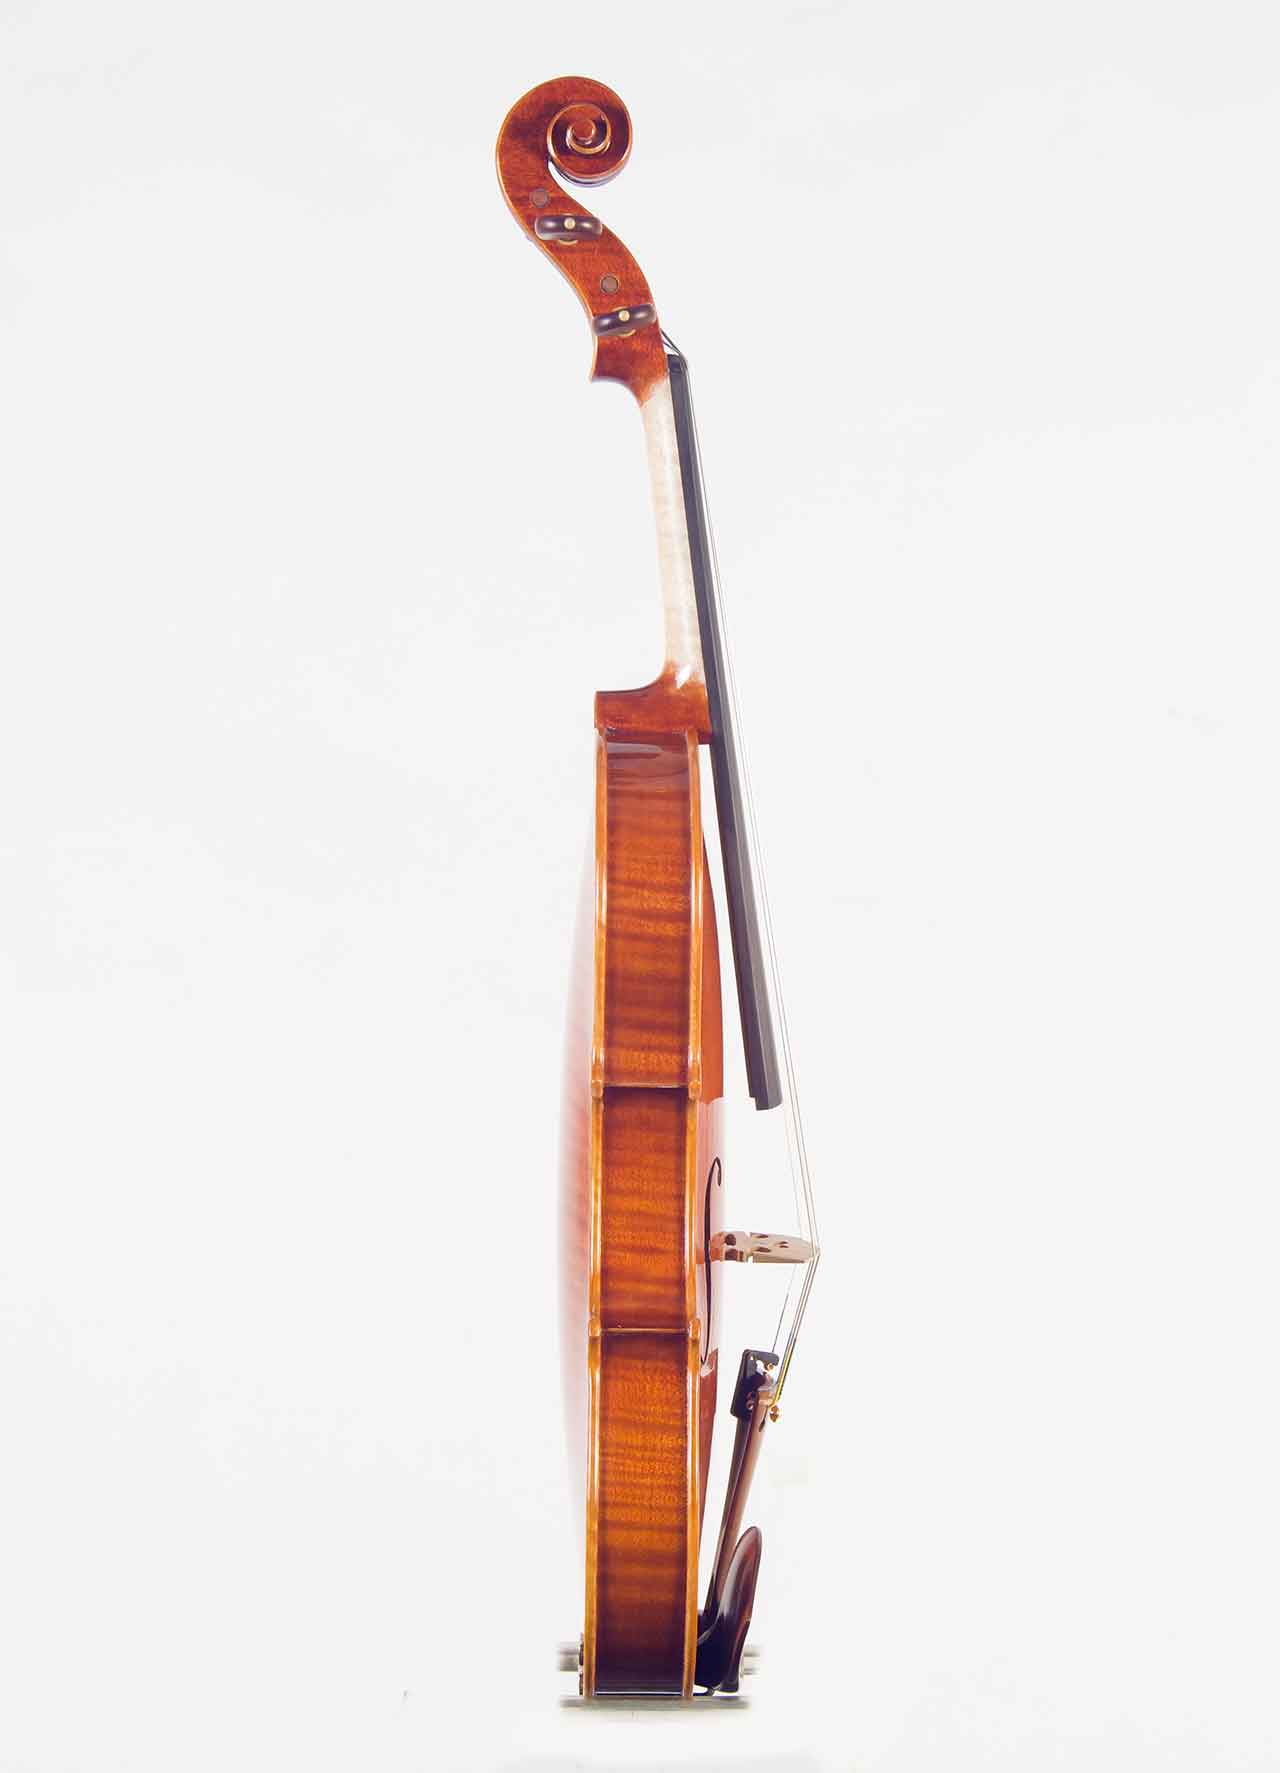 Petko Petkov Violins Stradivari Cremonese For Sale